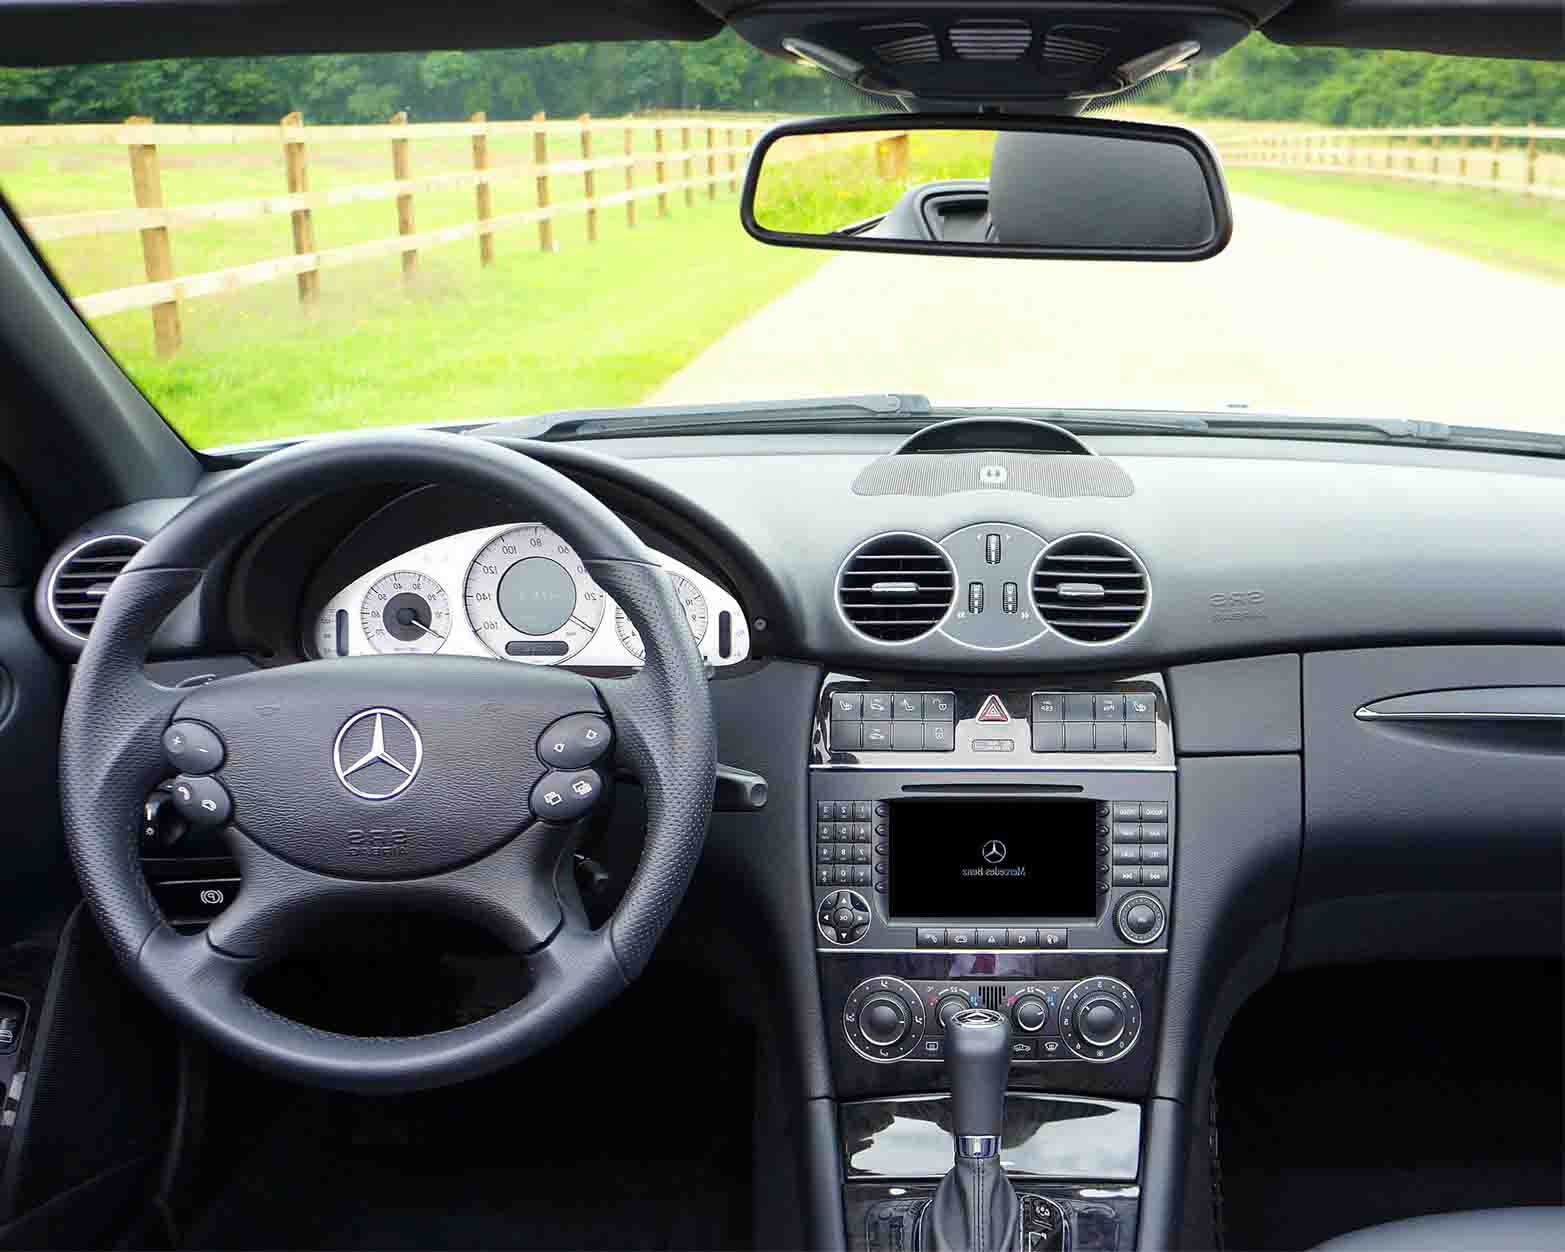 a picture of a Black Mercedes Benz Car Interior